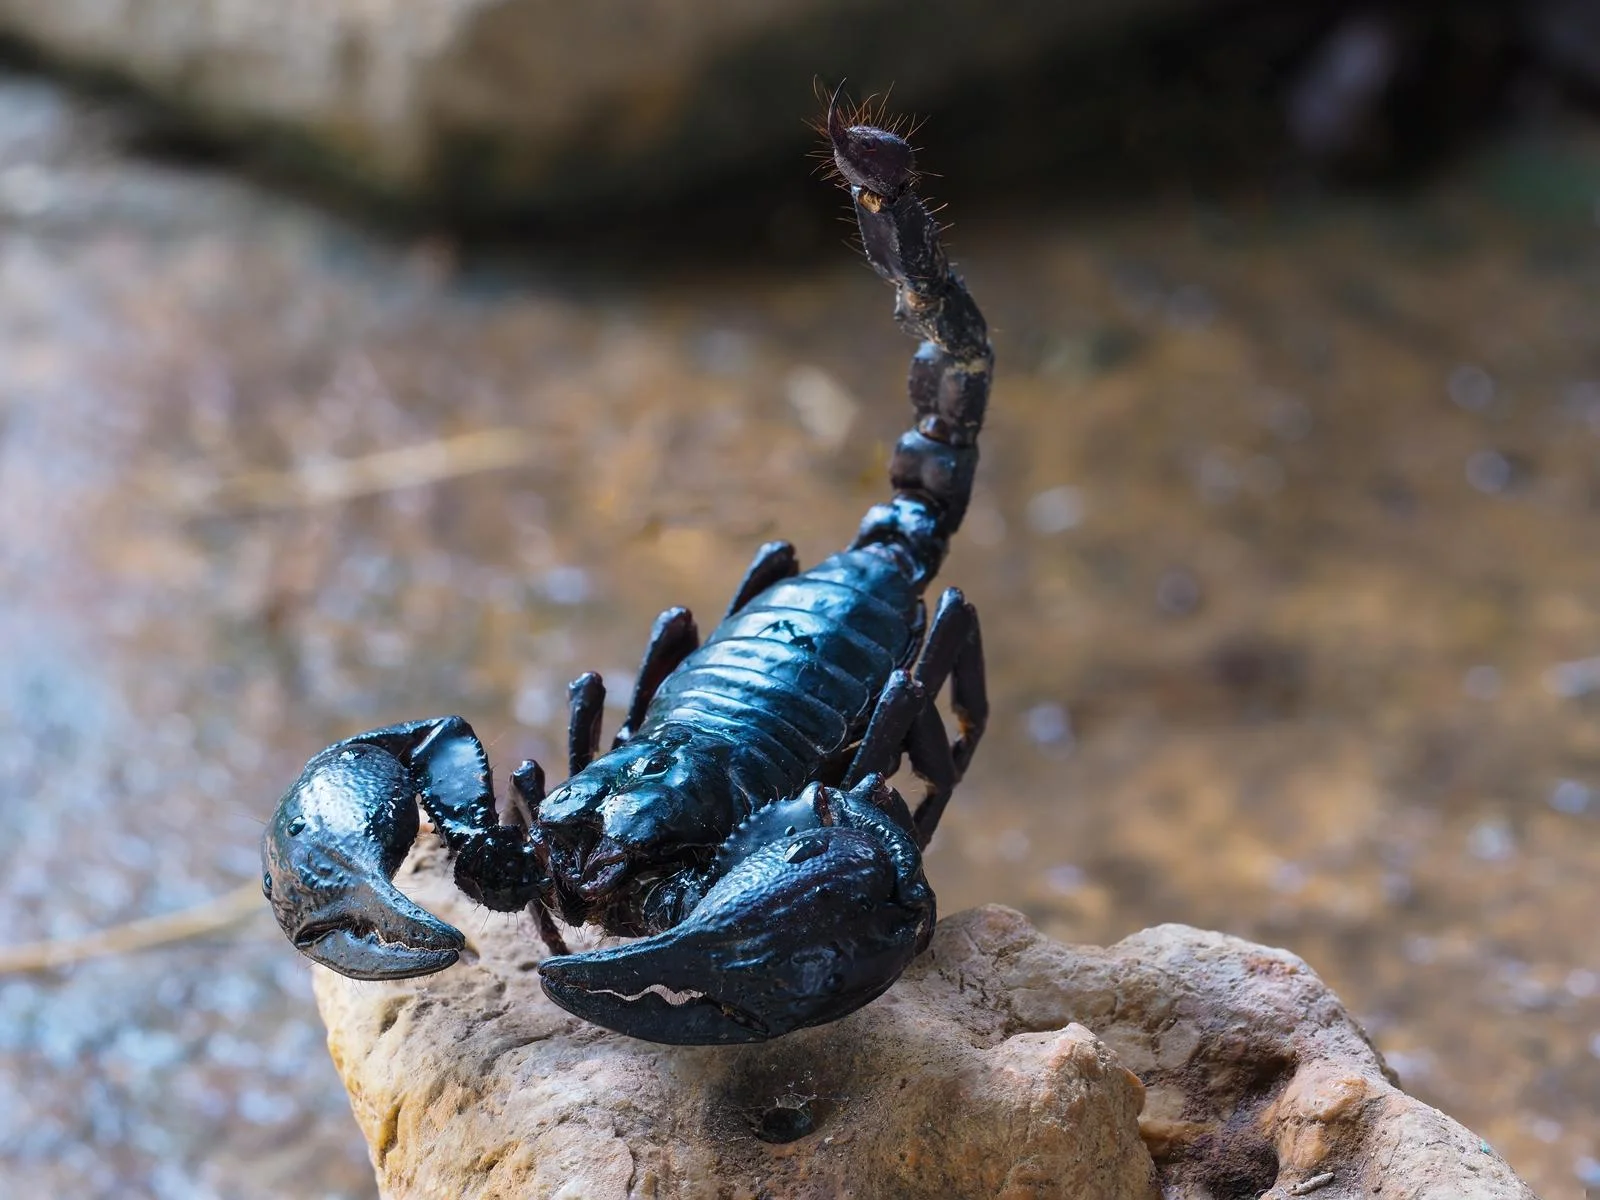 Black scorpion with raised stinger